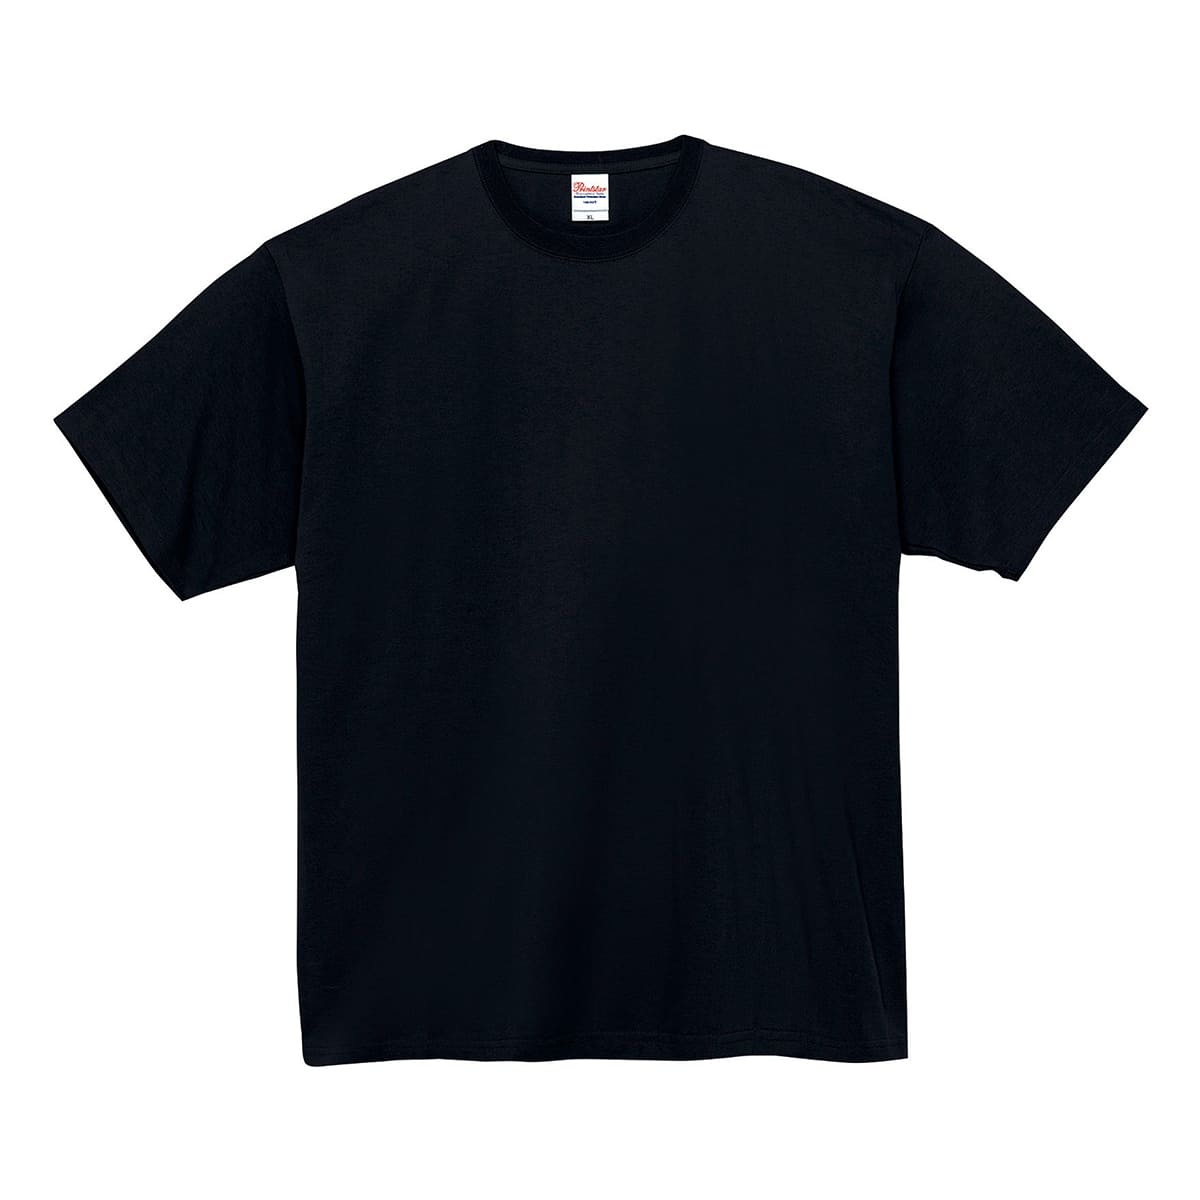 tシャツ メンズ Printstar 7.4オンス スーパーヘビーTシャツ 000148-hvt 1...